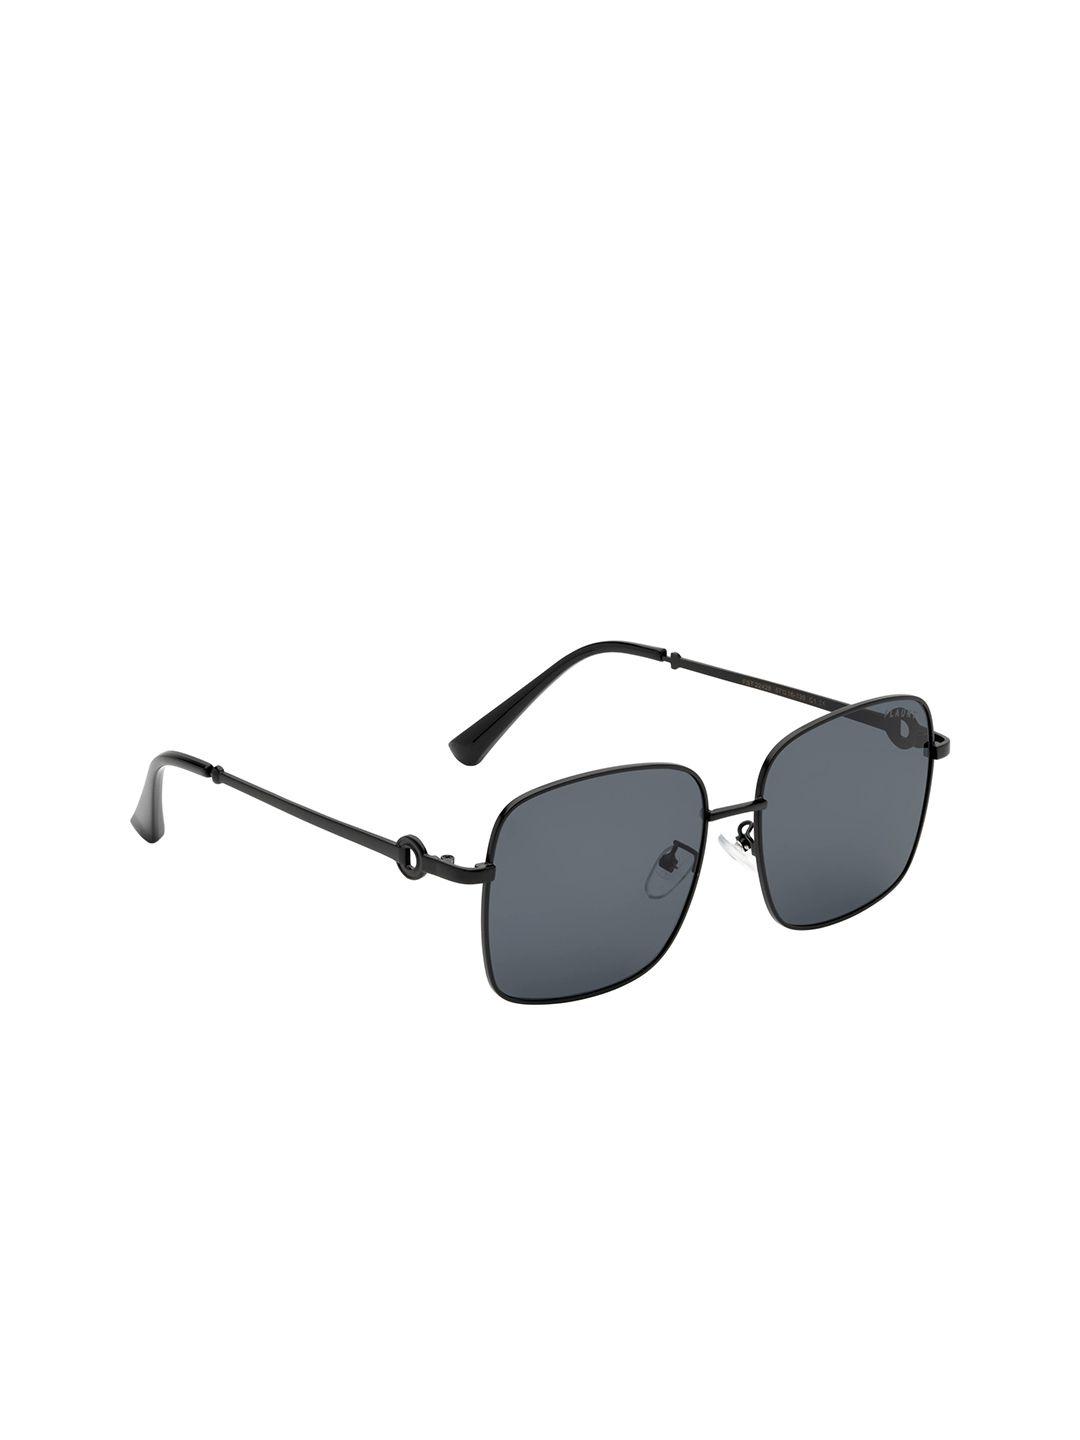 femina flaunt women grey lens & black square sunglasses with uv protected lens